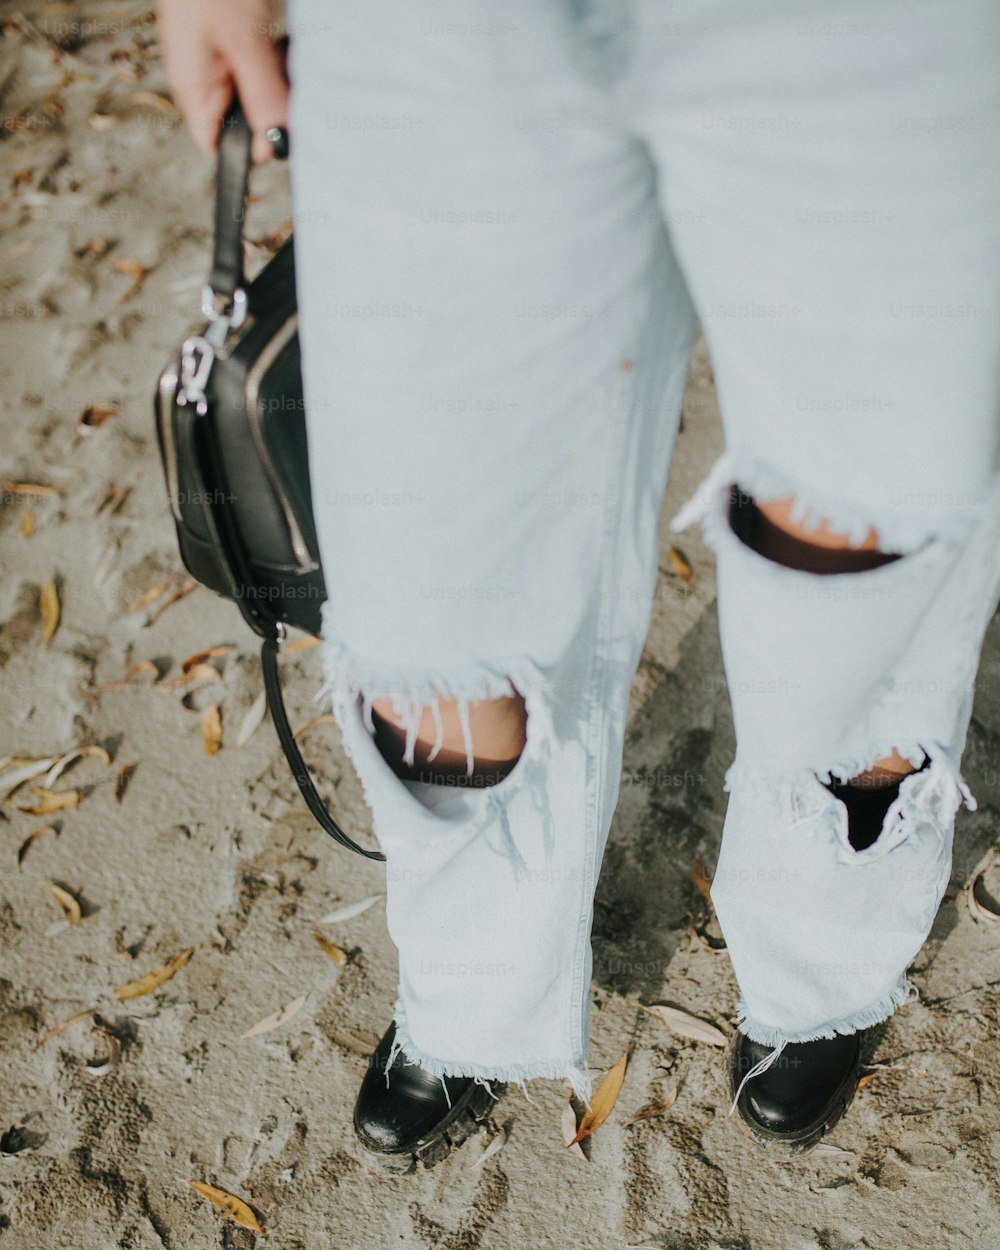 Una persona con jeans rotos sosteniendo un bolso